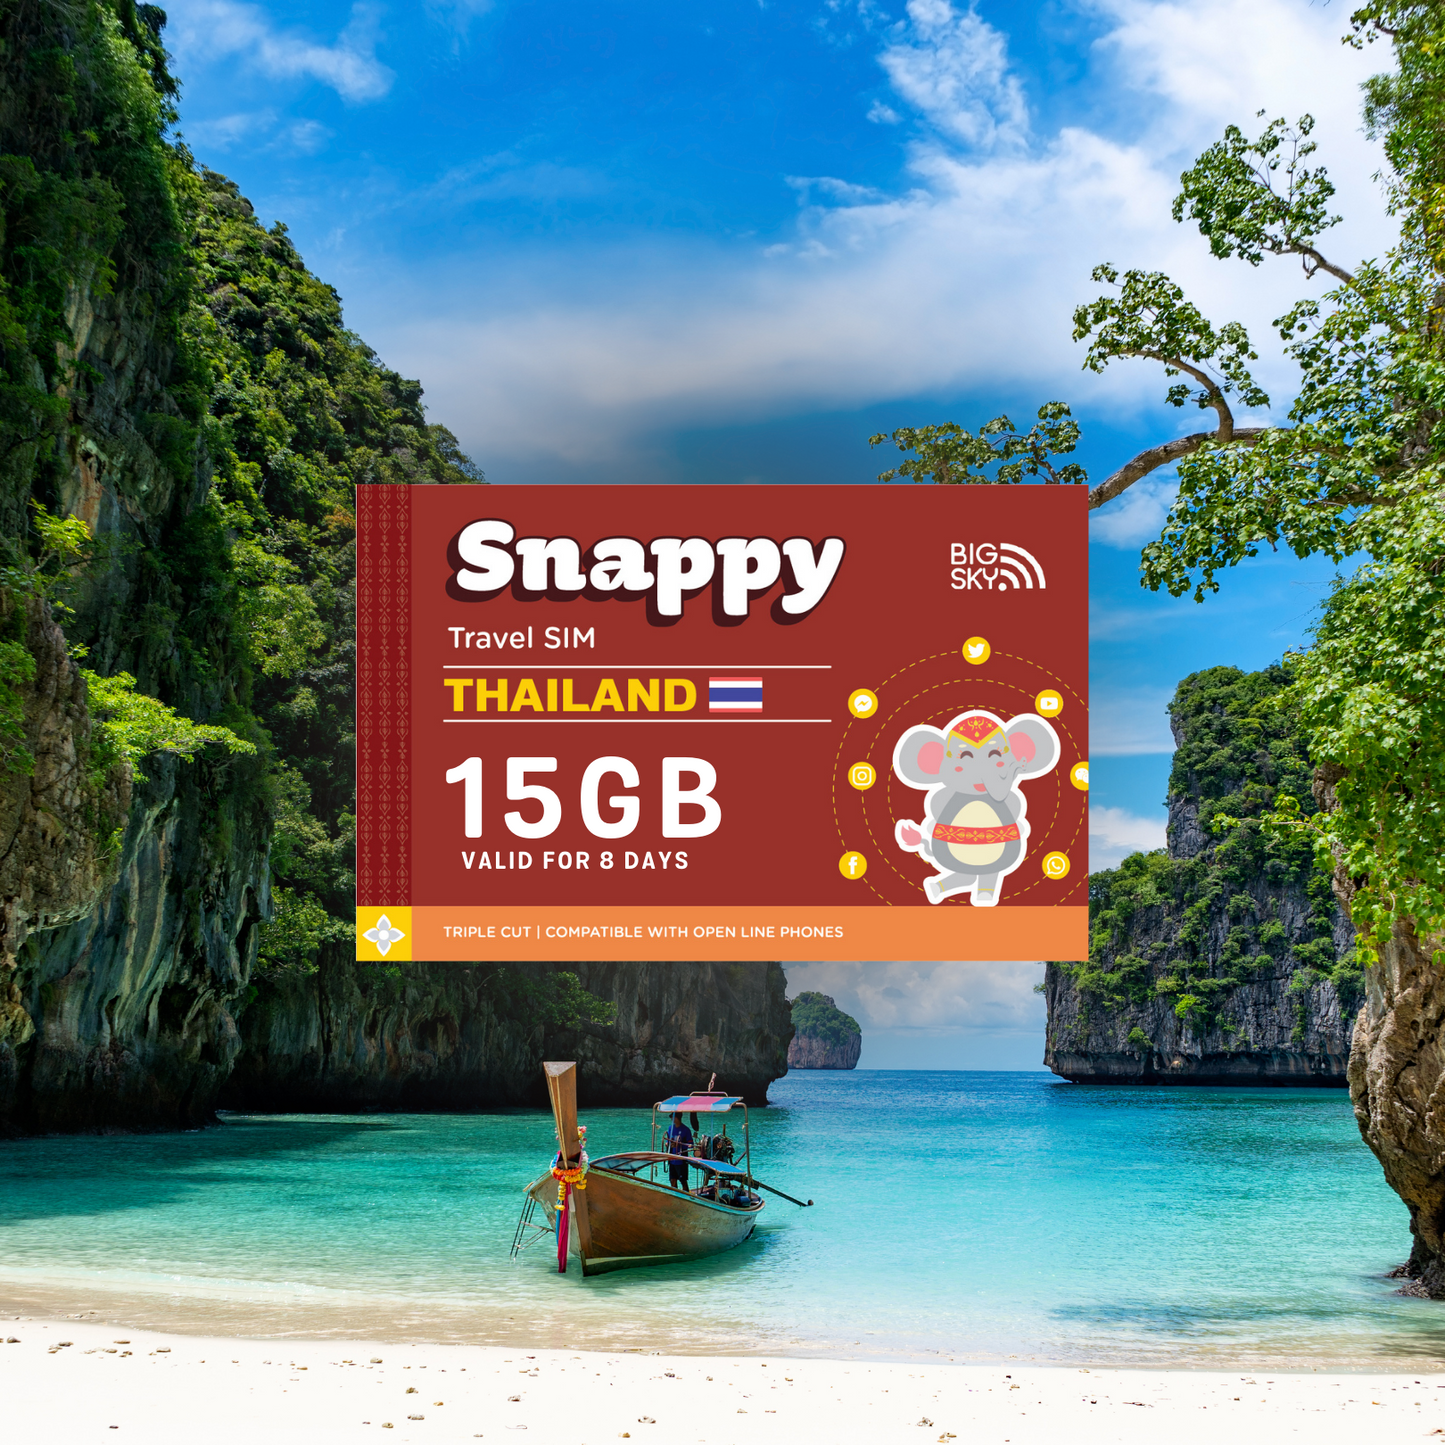 15GB THAILAND TRAVEL SIM (Snappy Travel SIM Powered by TrueMove)